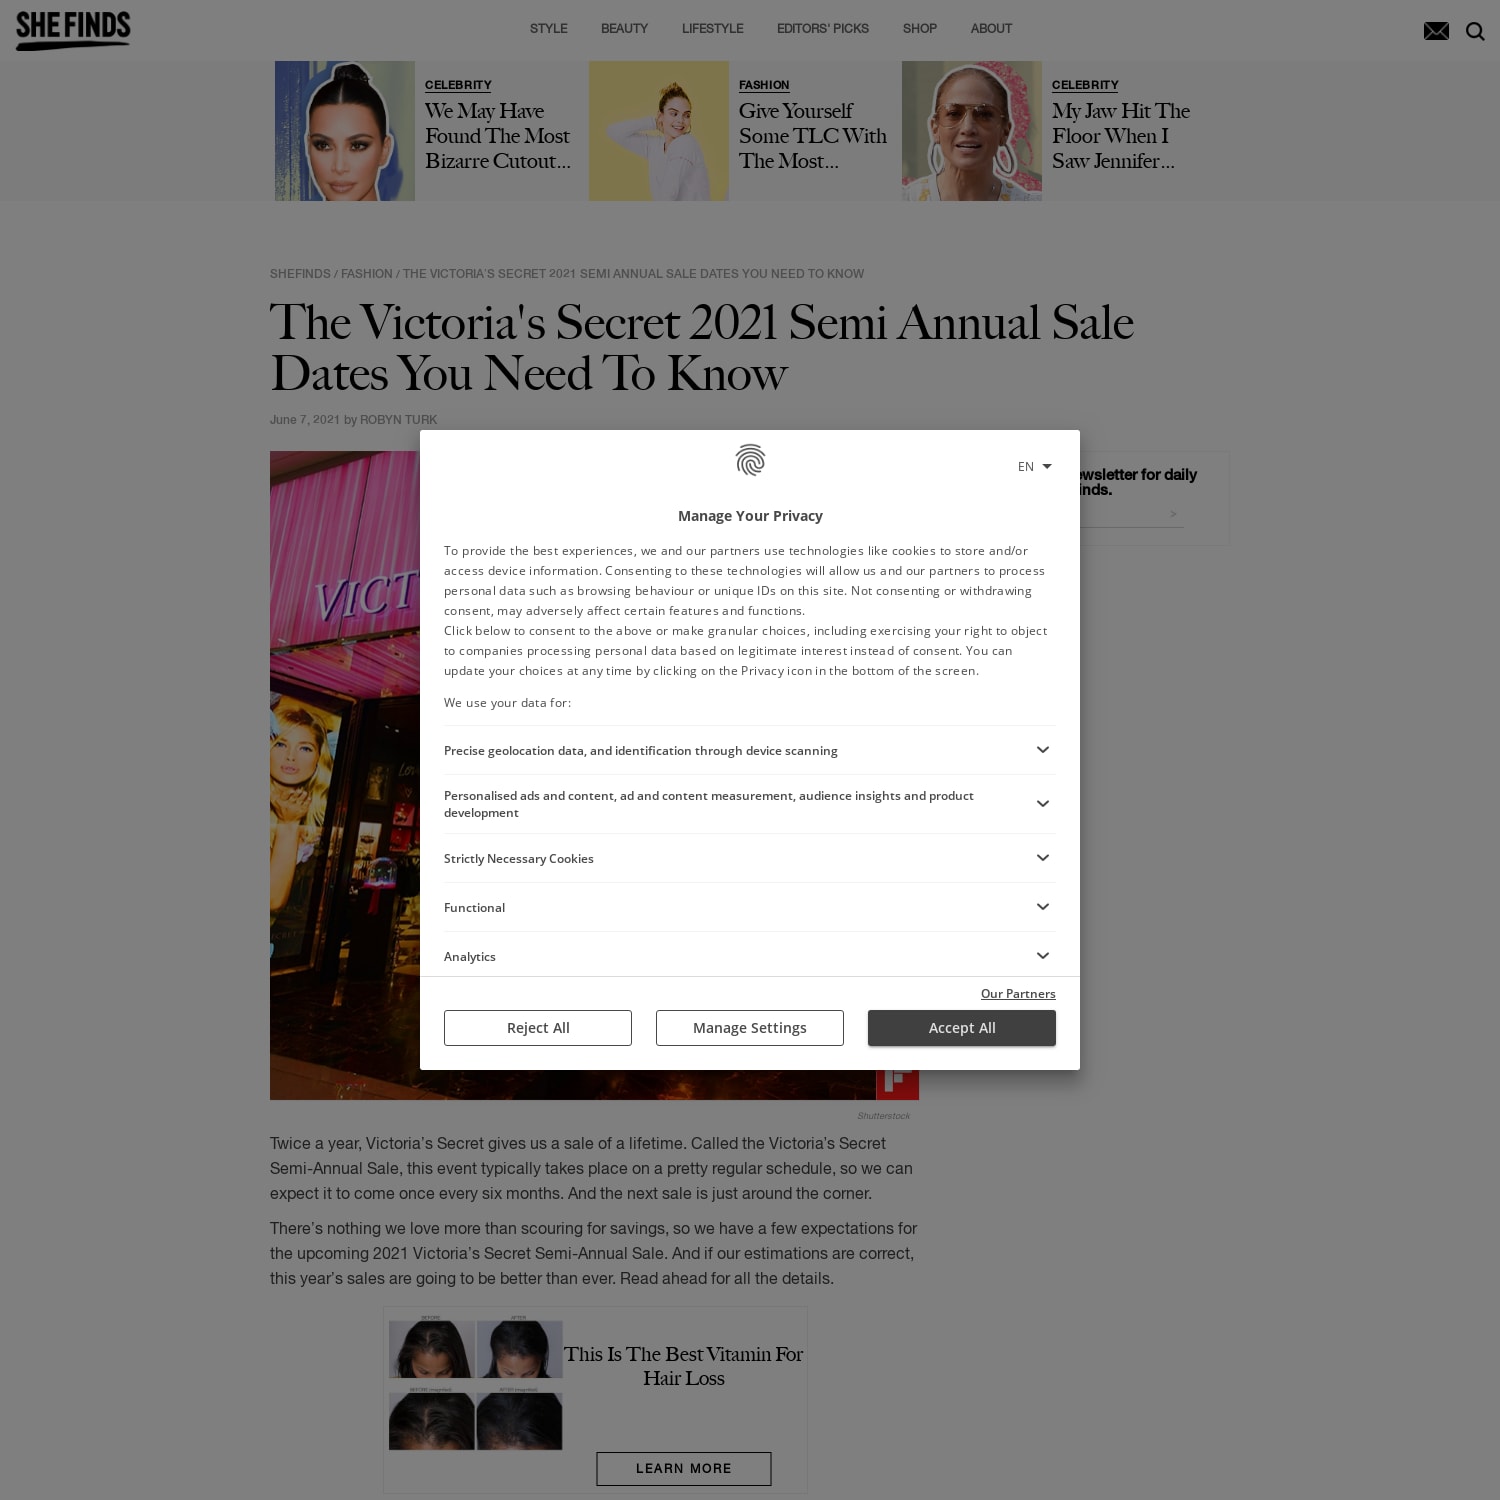 The Victoria's Secret 2021 Semi Annual Sale Dates You Need To Know